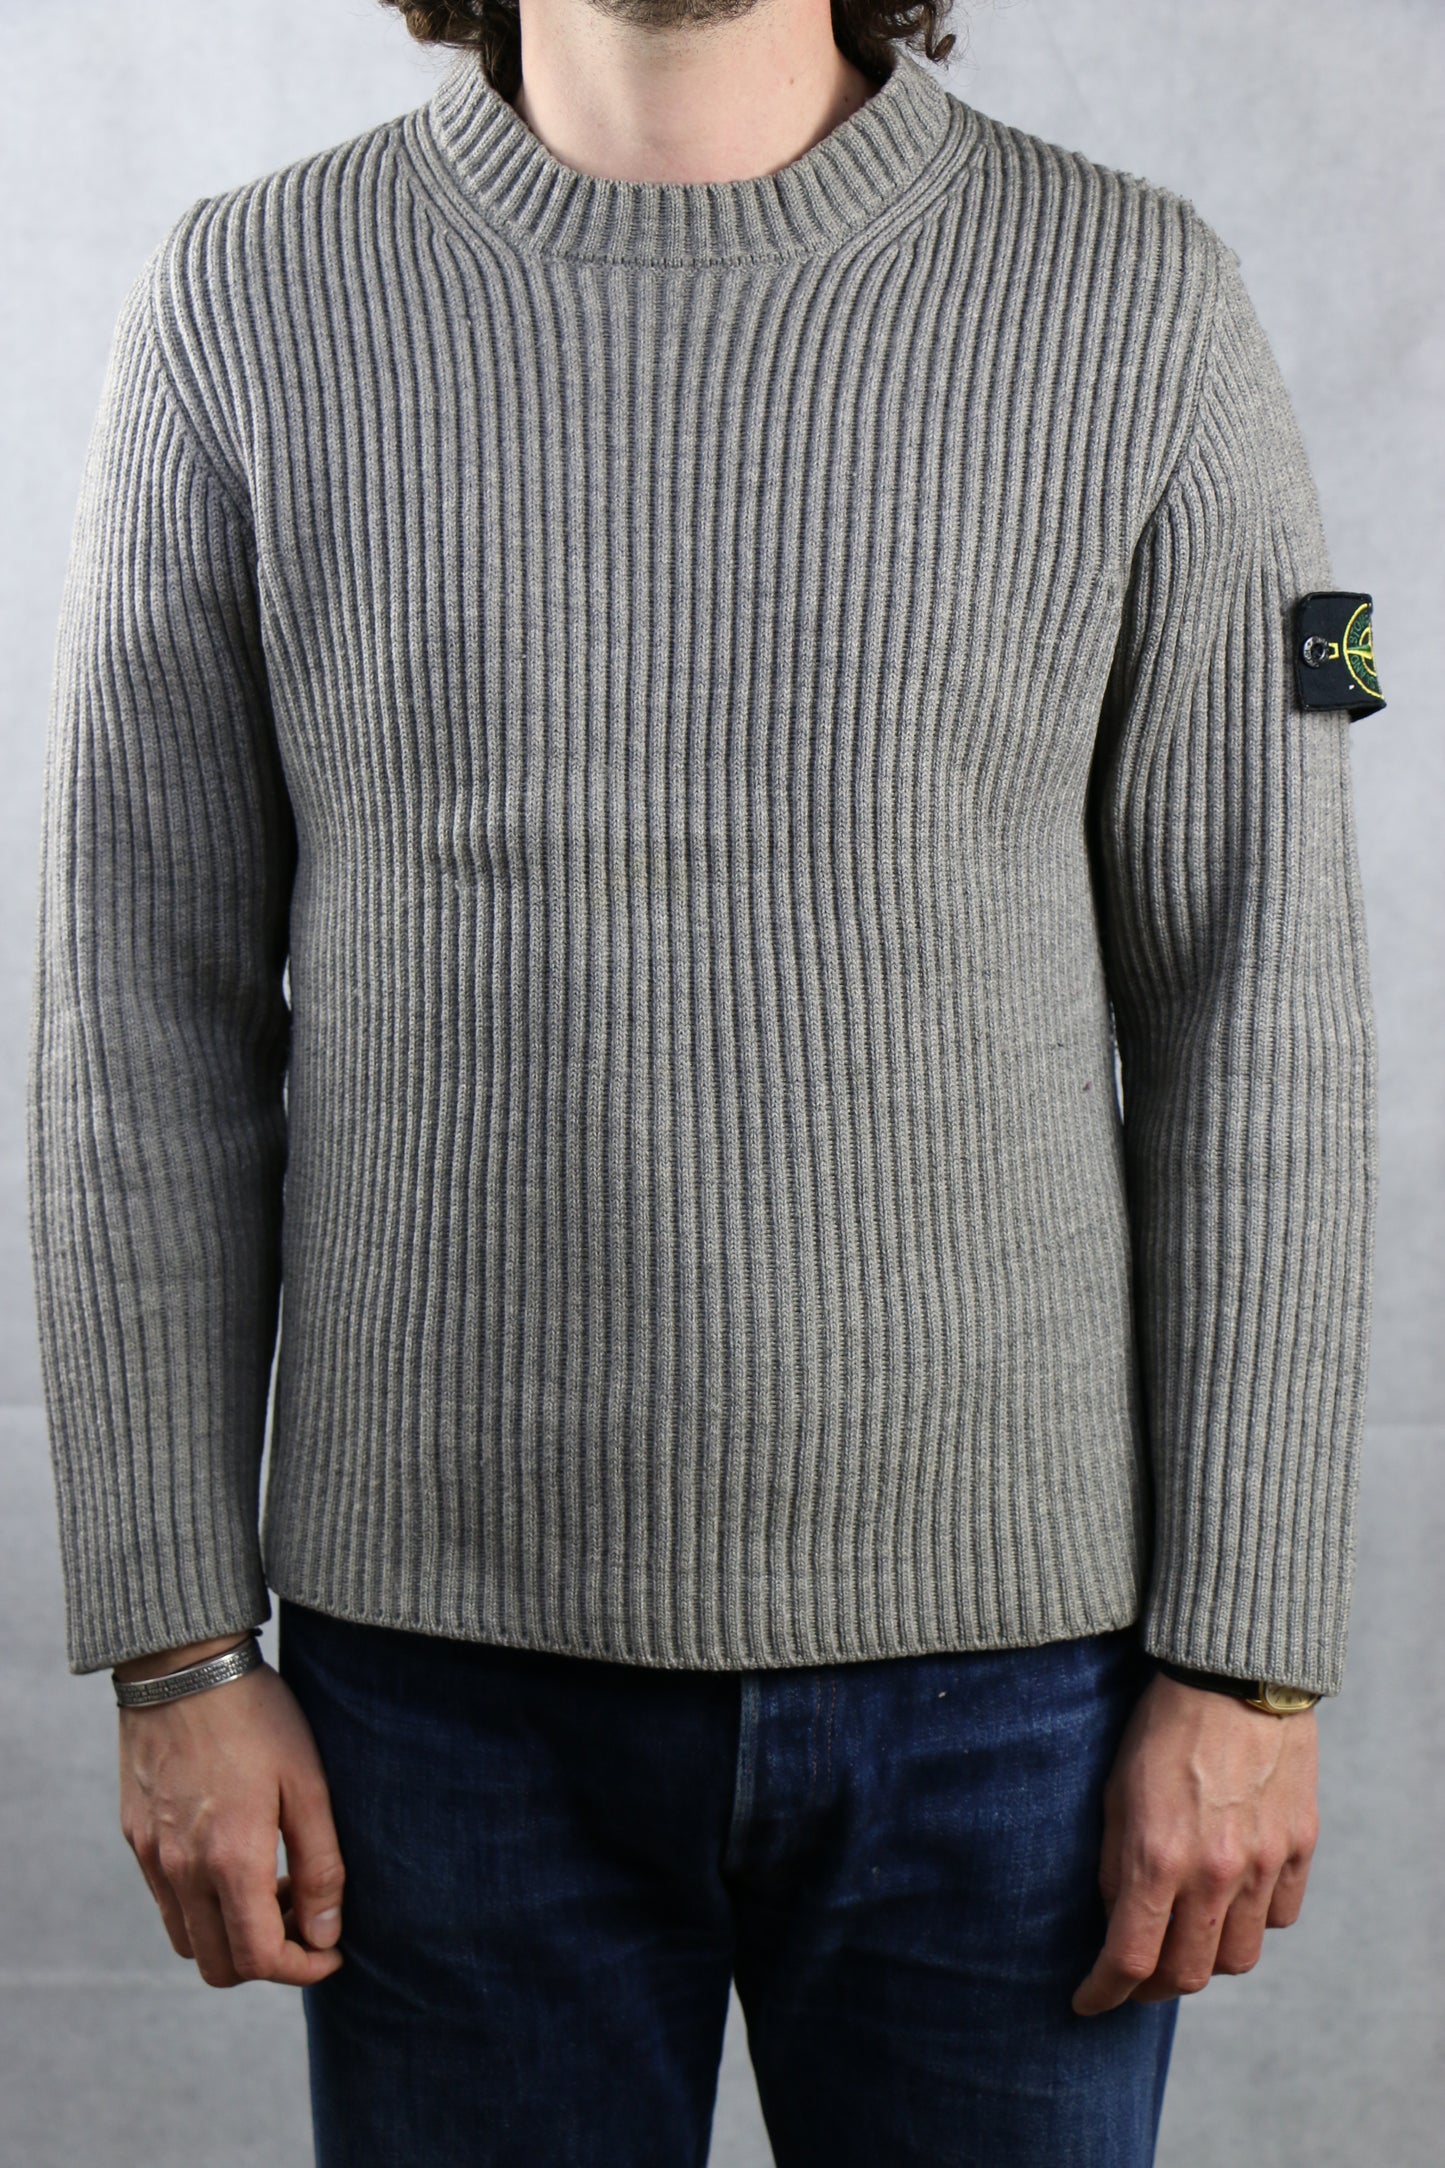 Stone Island Gray Sweater - vintage clothing clochard92.com